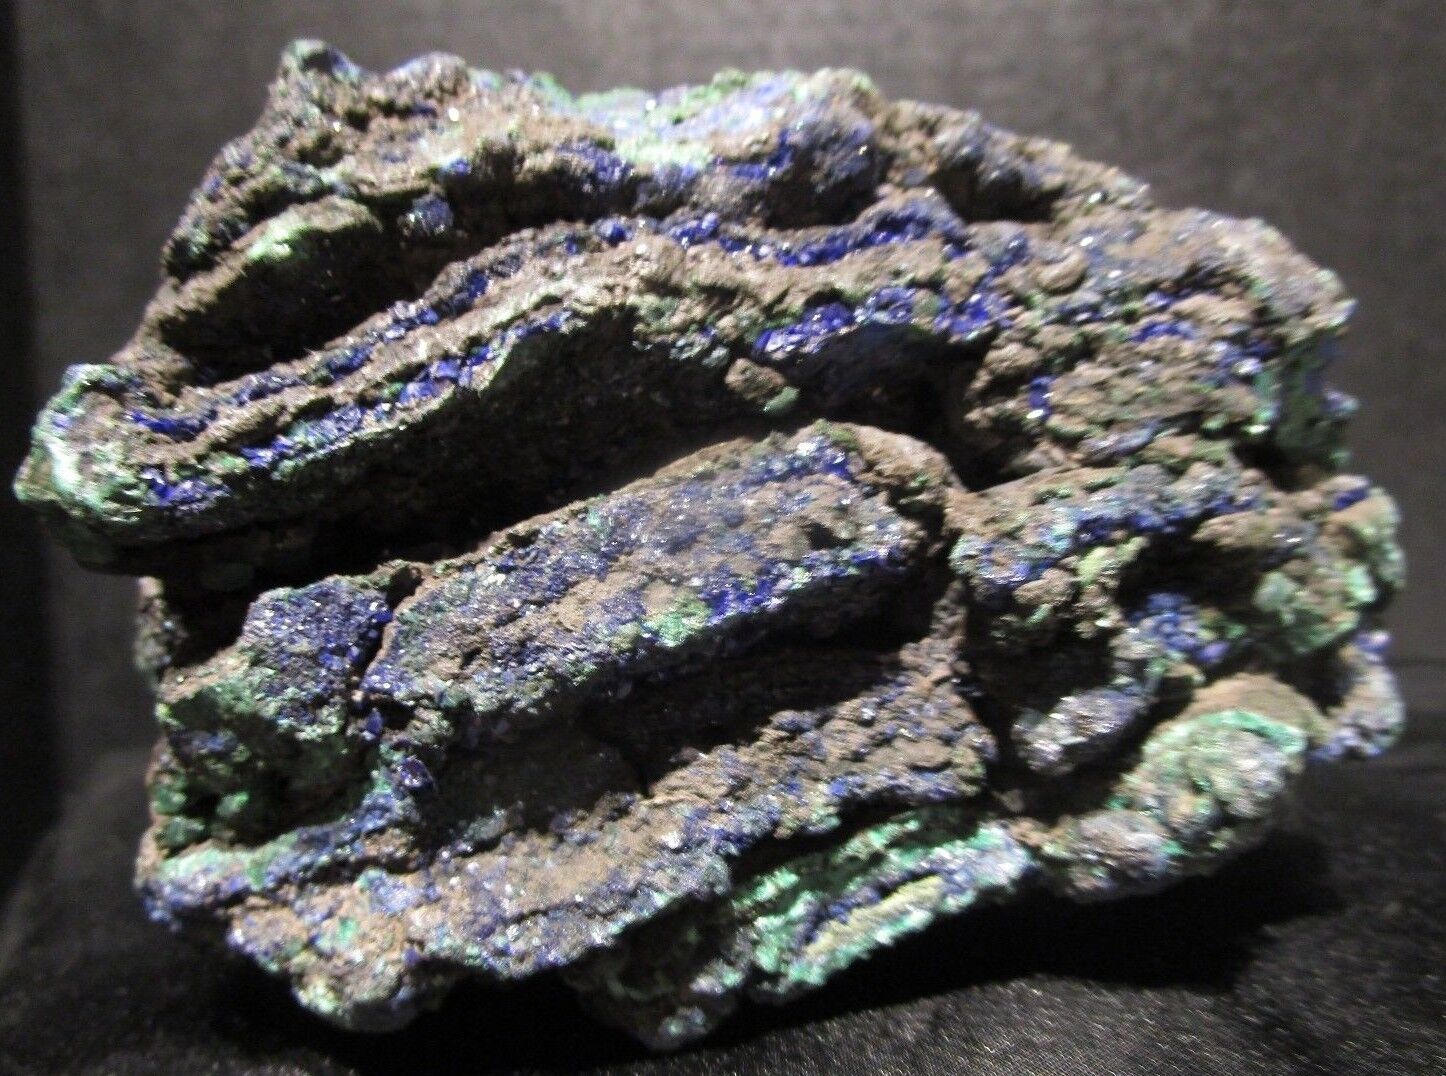 Layered Azurite and Malachite, Vivid Blue Crystals, Botryoidal Greens